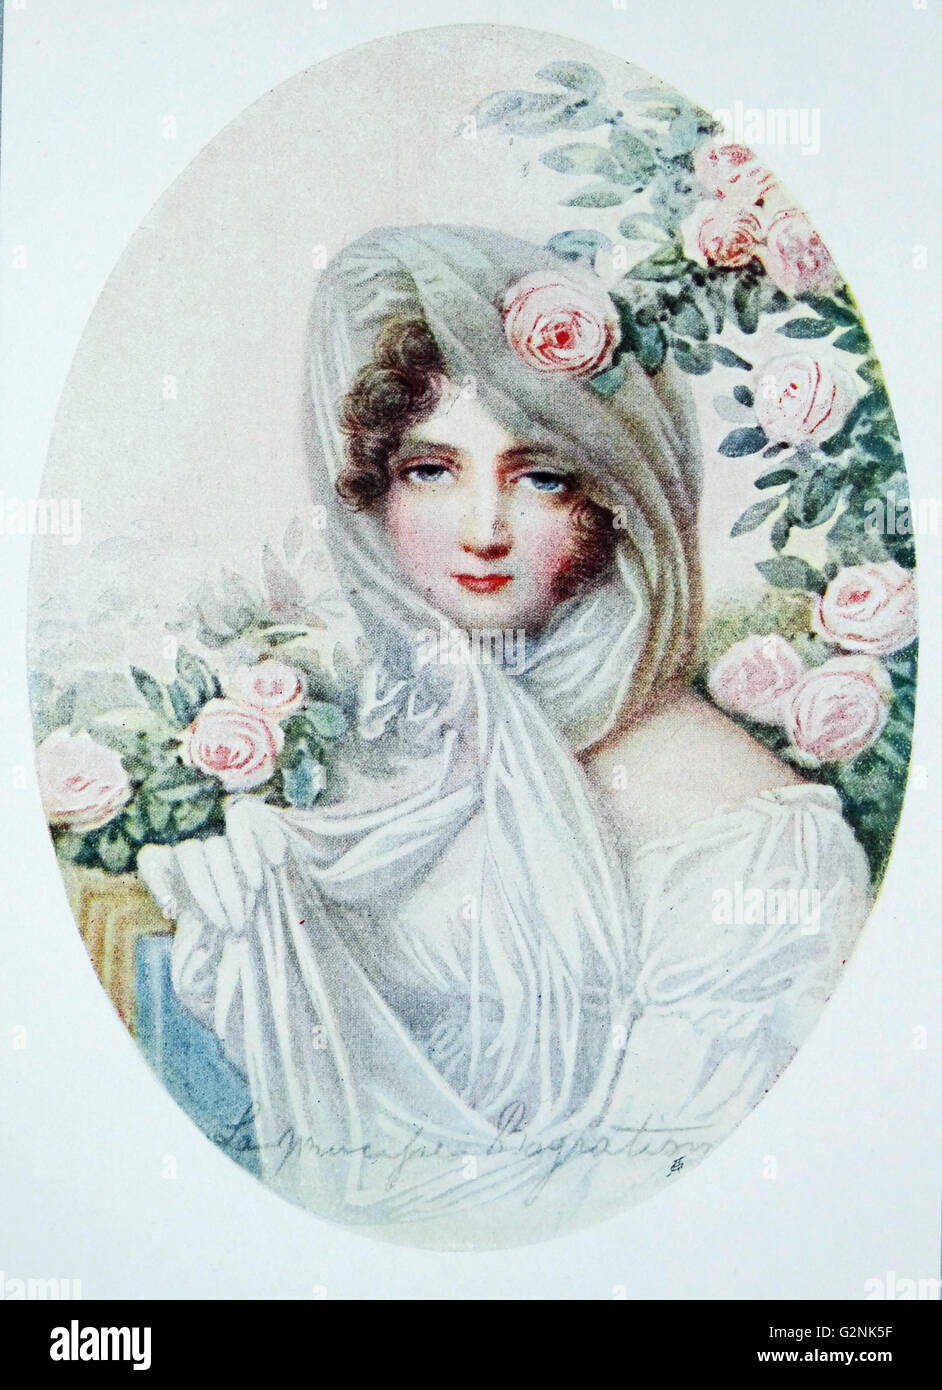 Furstin Katharina Bagratiòn Skawribsja (1783-1857) un aristocratico russo da Jean Baptiste Isabey (1767-1855), un pittore francese Foto Stock